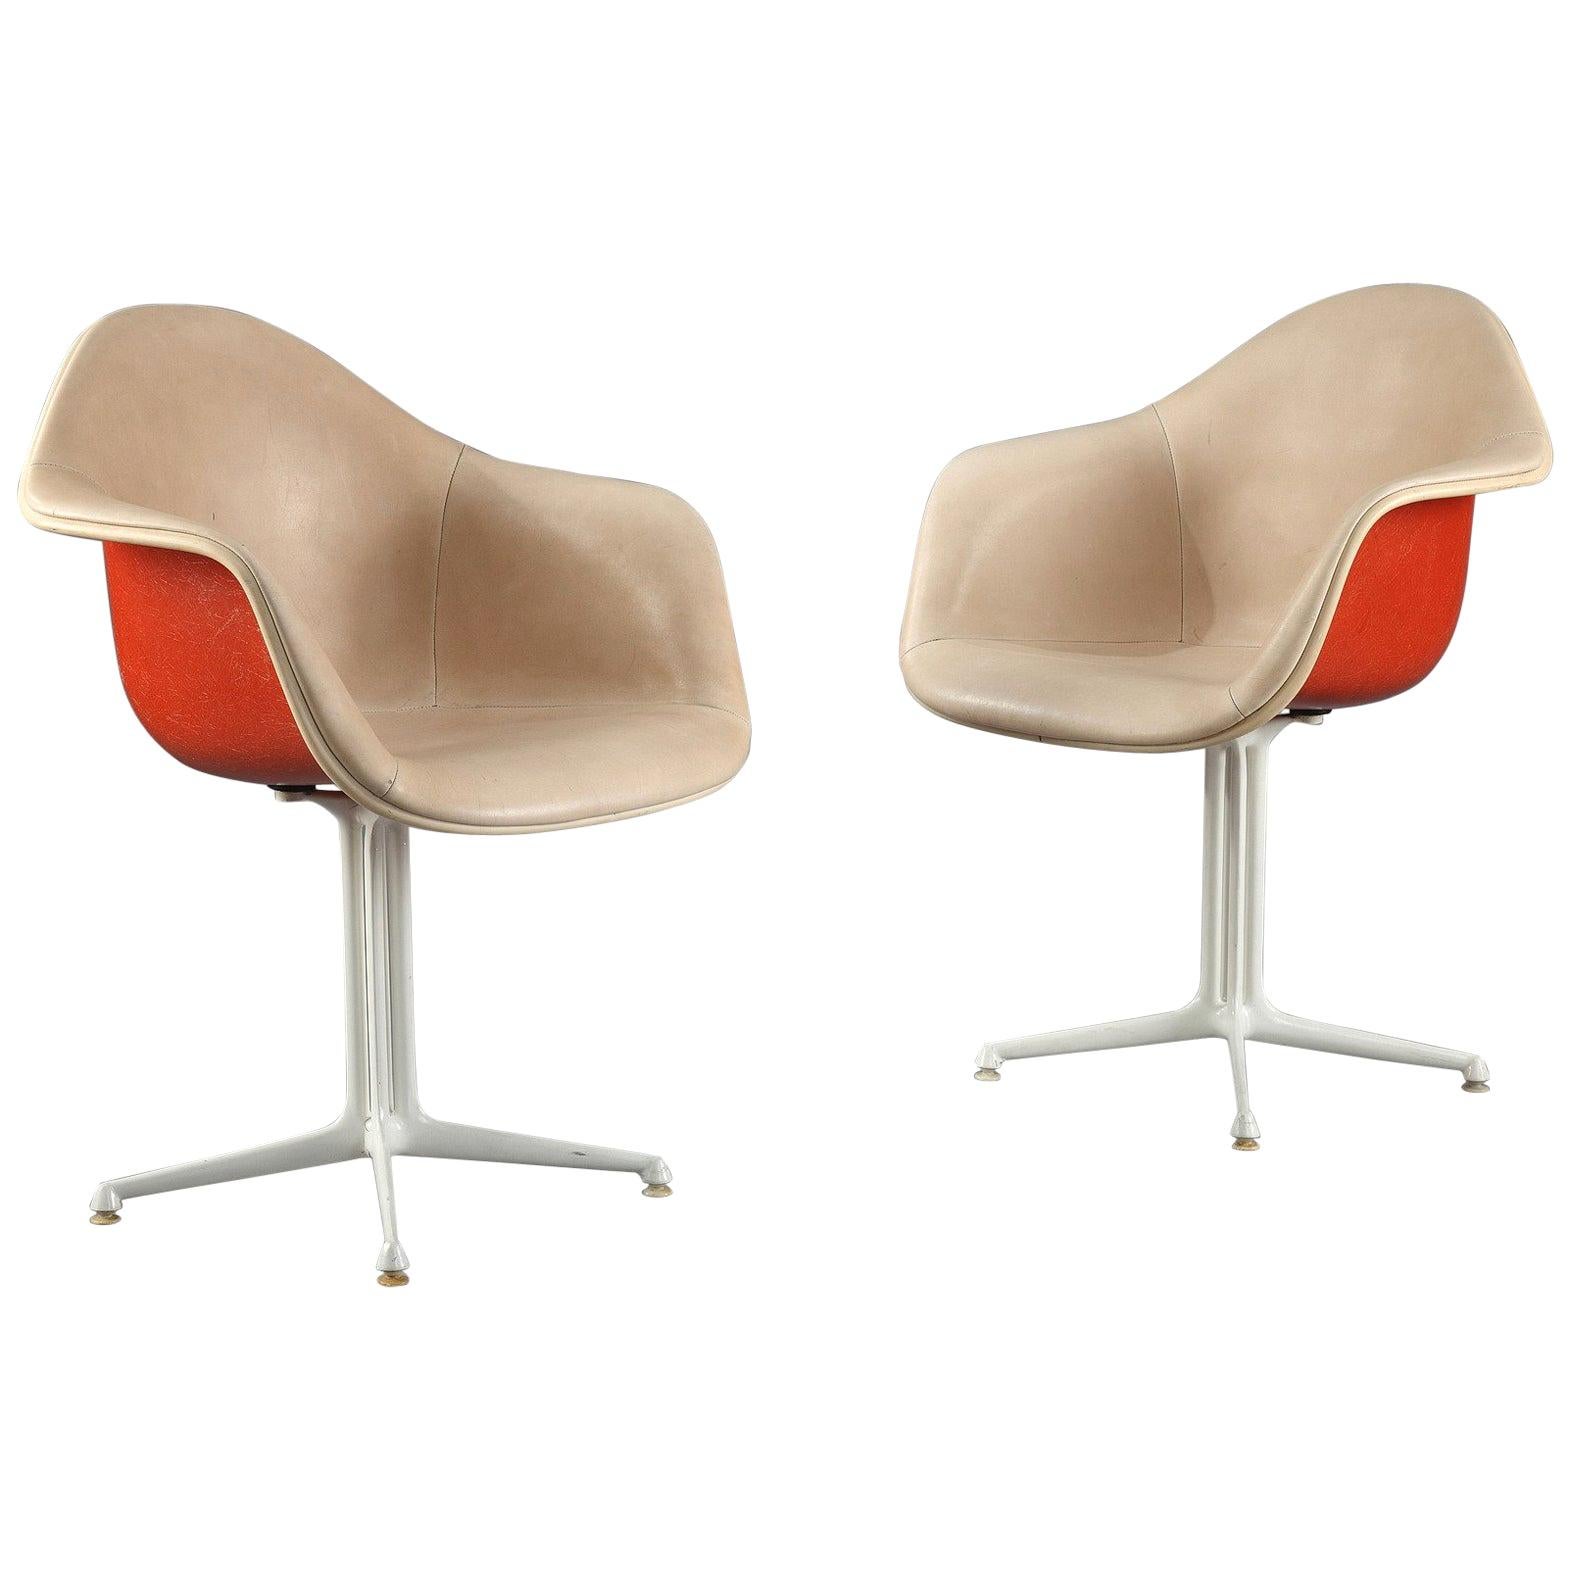 Rare Pair of La Fonda Chairs by Charles and Ray Eames